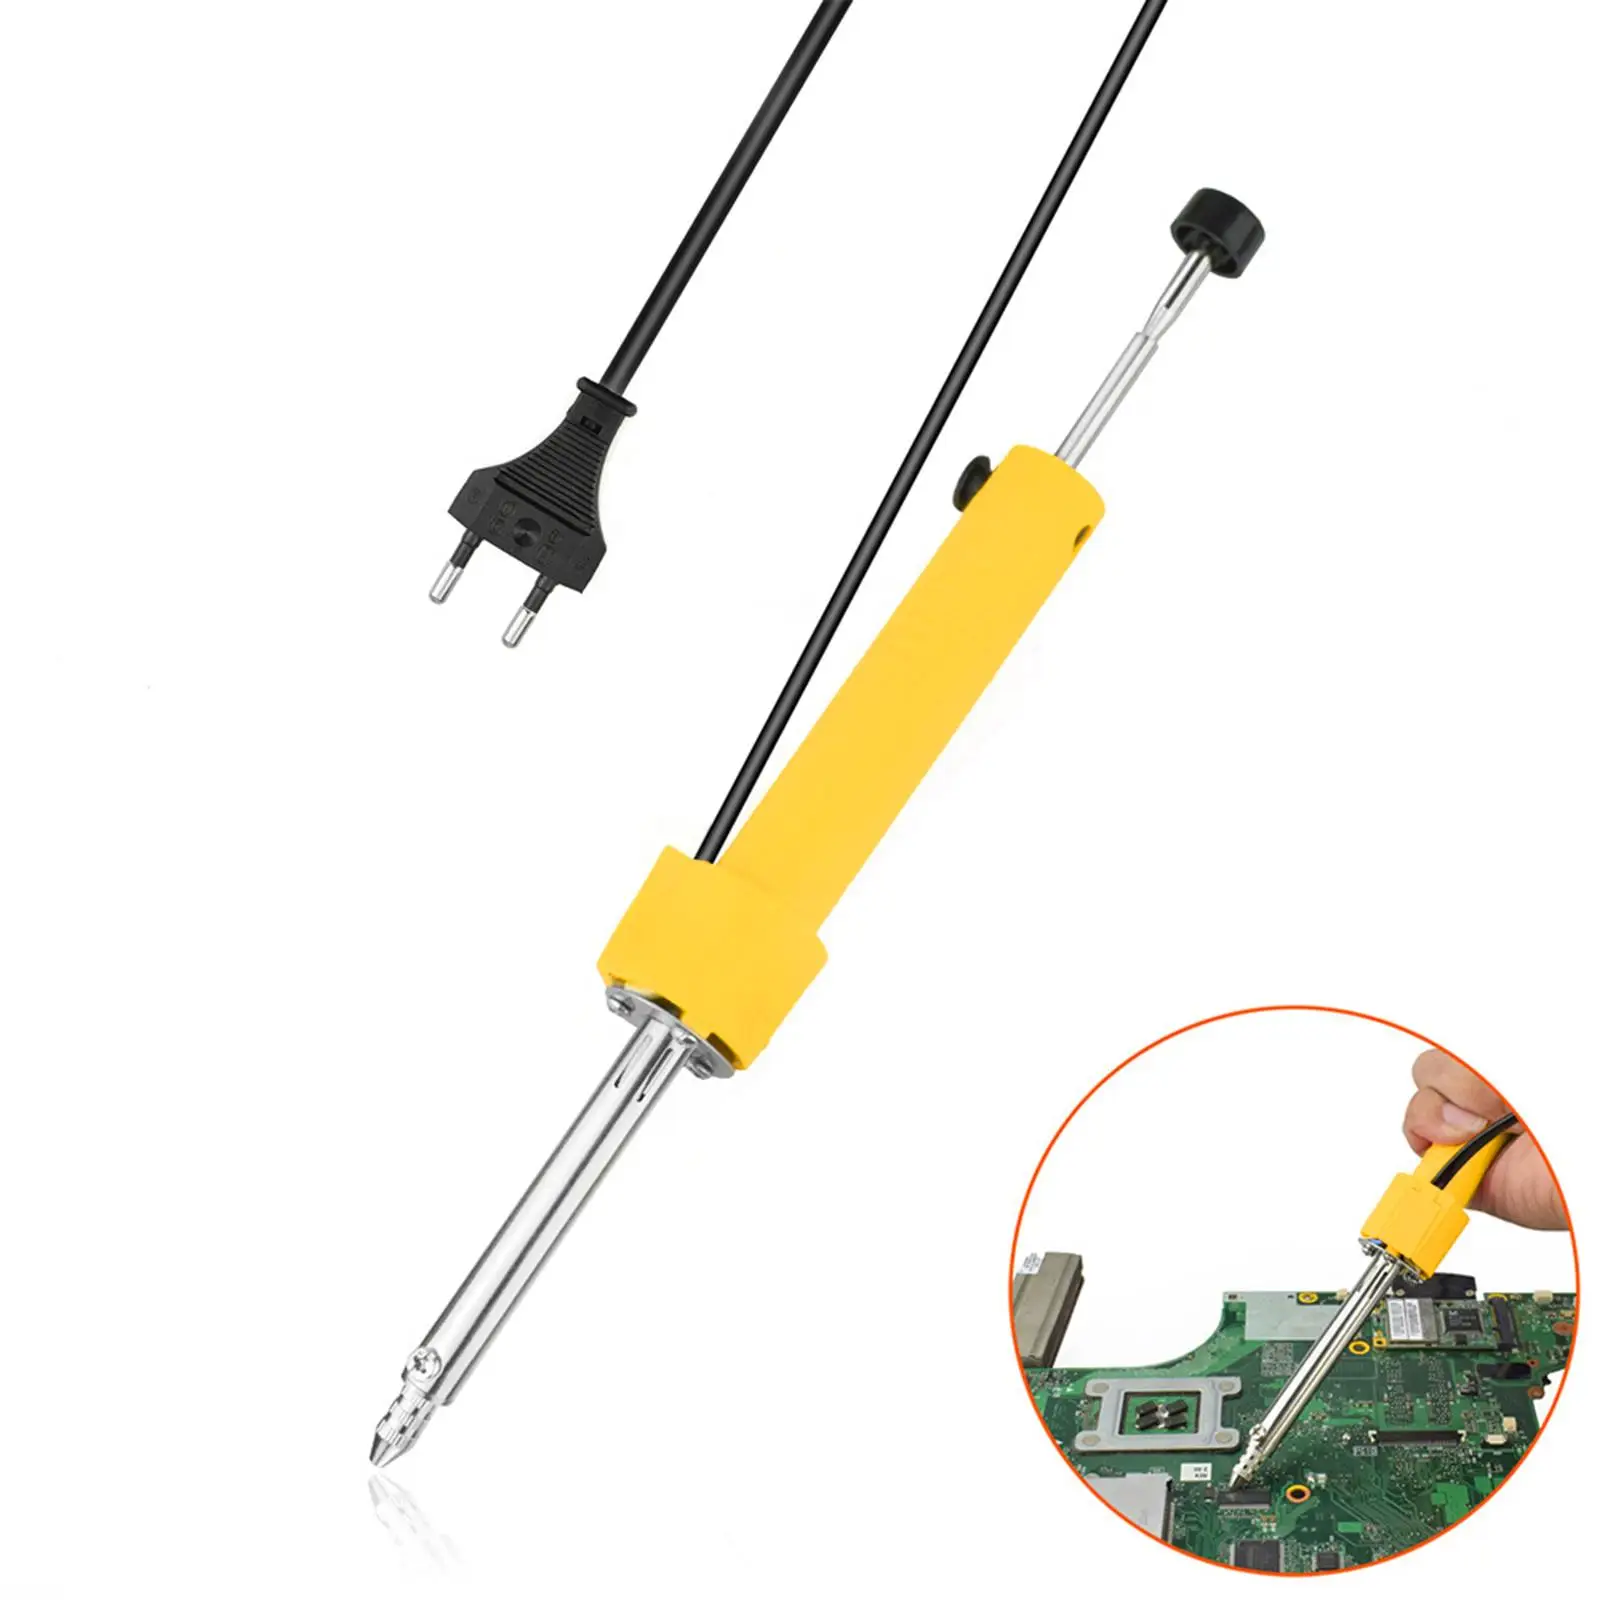 Electric Desoldering Tool DIY Portable Soldering Welding Repair Solder Removal Tool for Home DIY Hobby Jewelry Industry